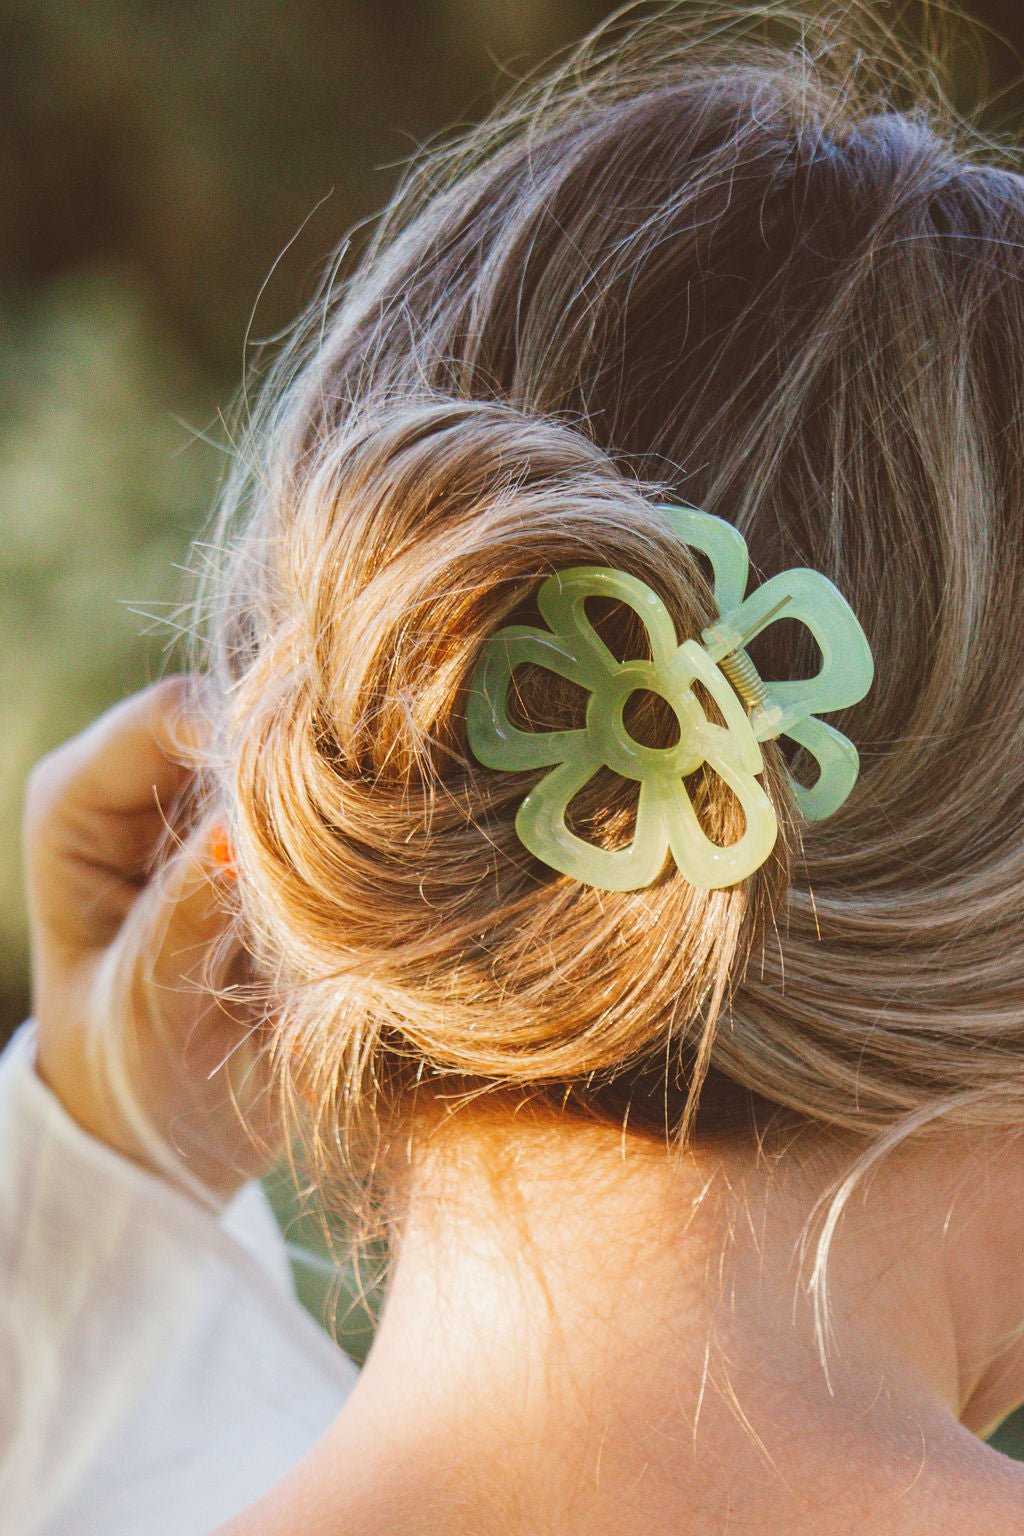 Pearl Daisy Flower Floral Hair Clip Clips Claw Pin Pins Barette